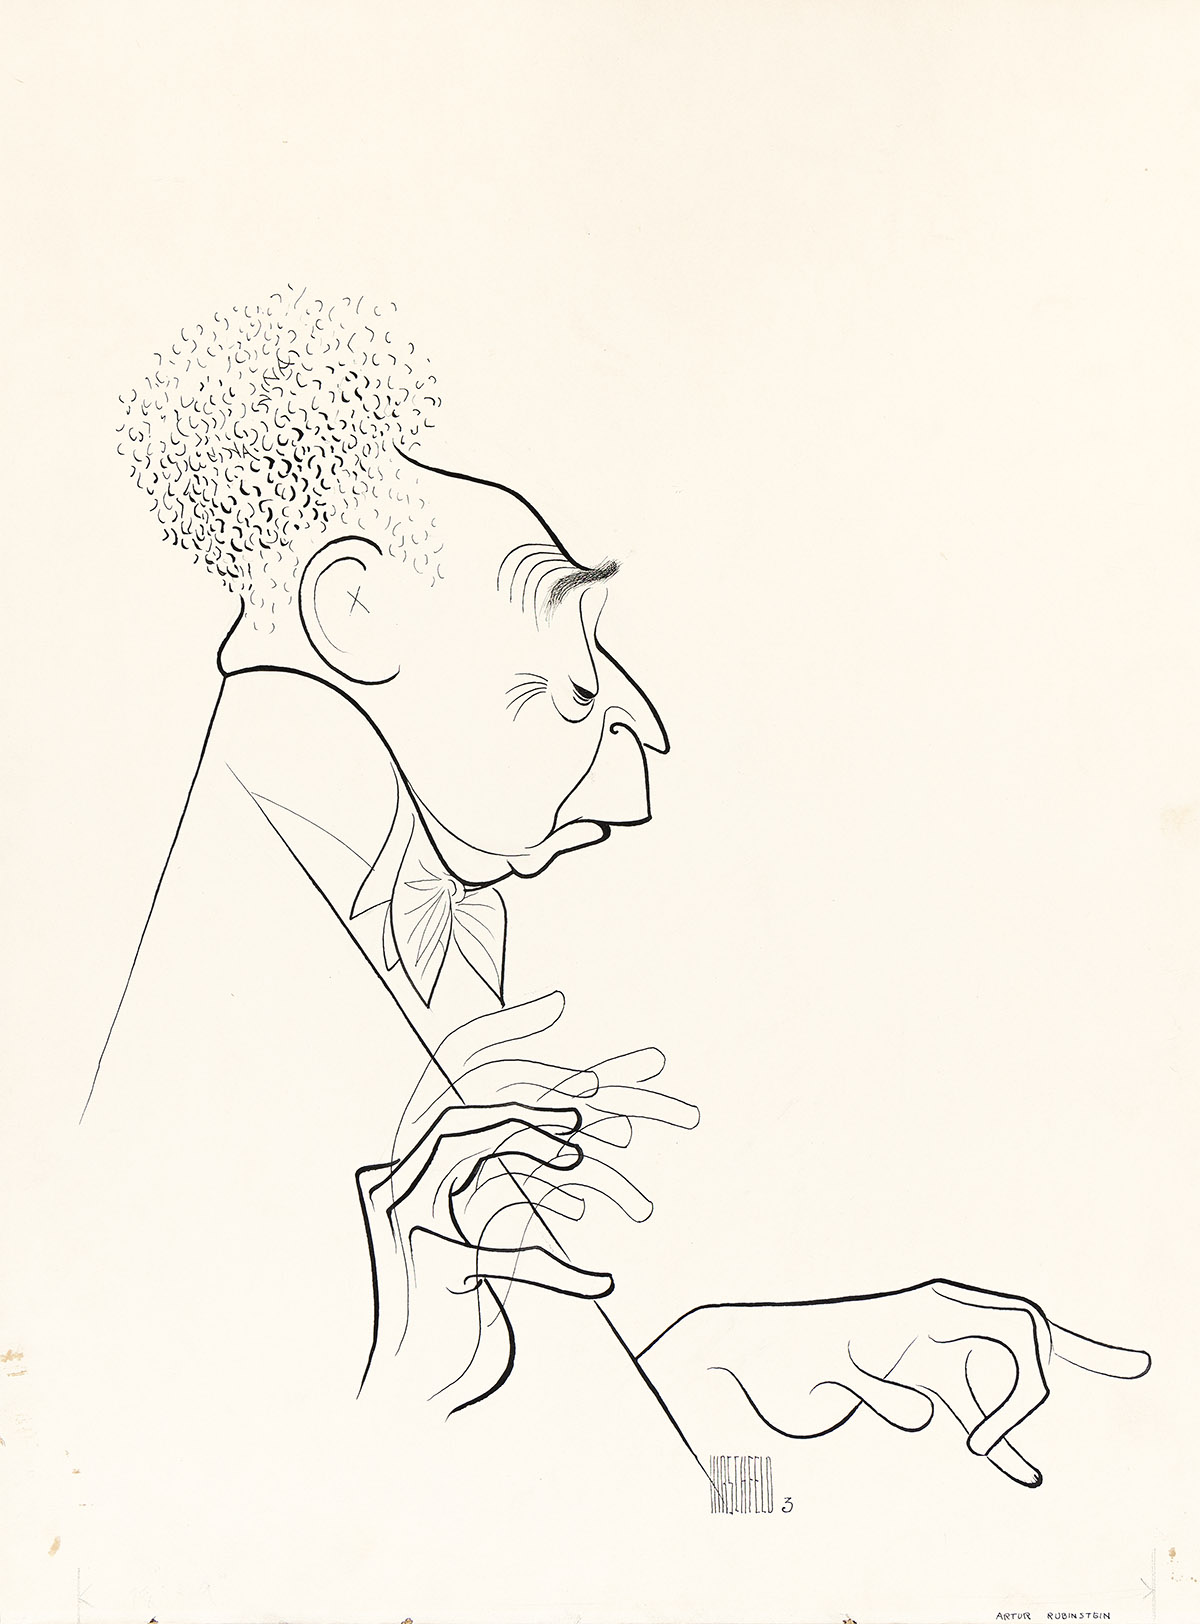 Arthur Rubinstein - Biography, Artist